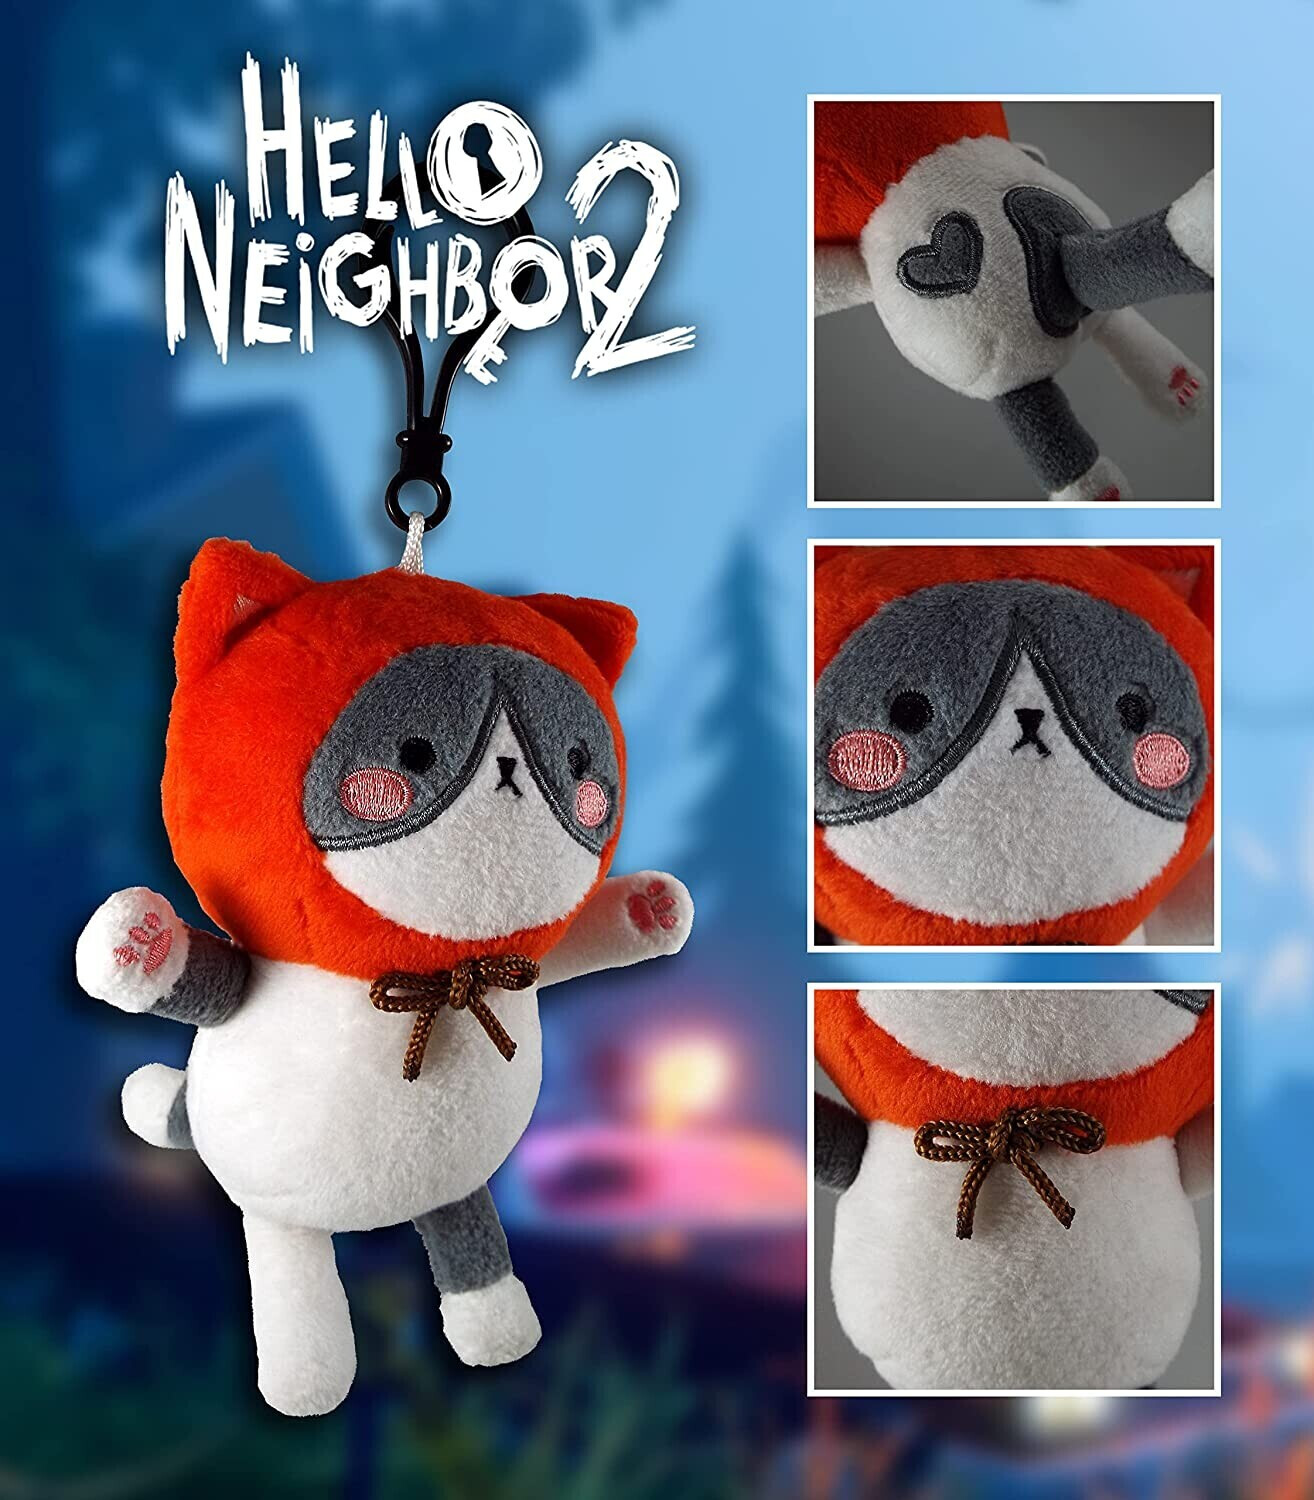 Acheter Hello Neighbor 2 - Deluxe Edition - Nintendo Switch prix promo neuf  et occasion pas cher